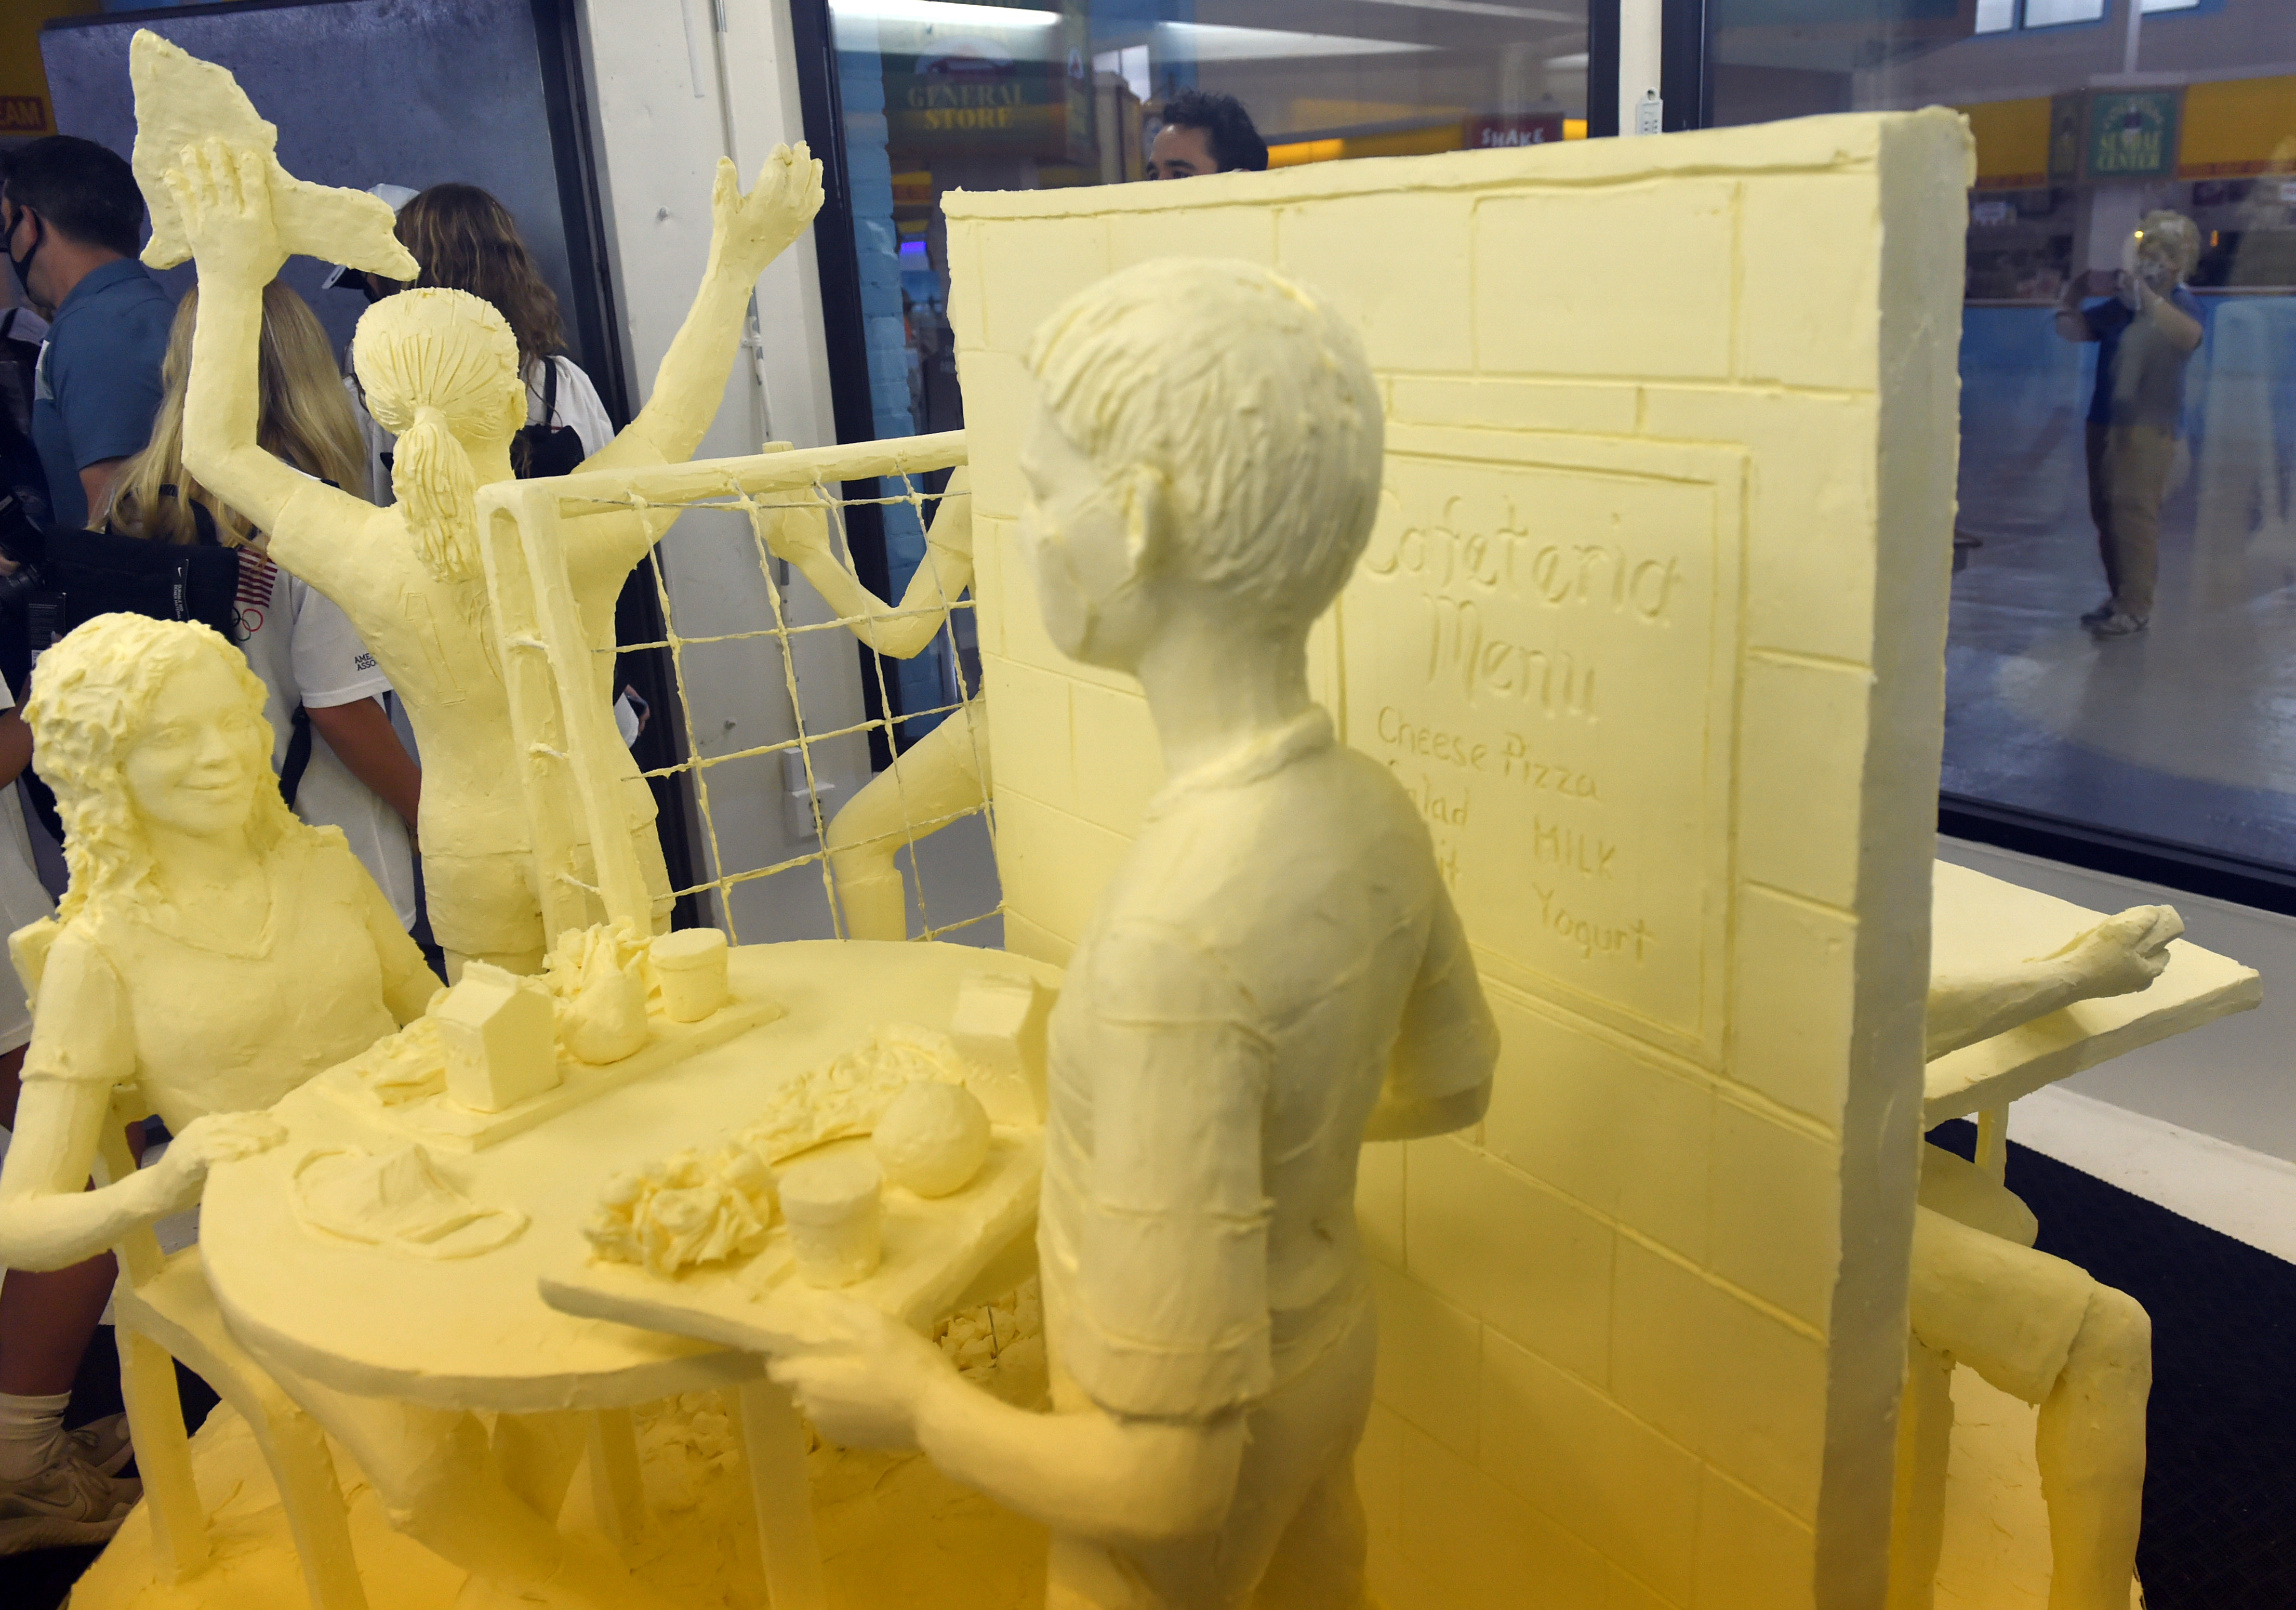 New York State Fair butter sculpture is taking shape